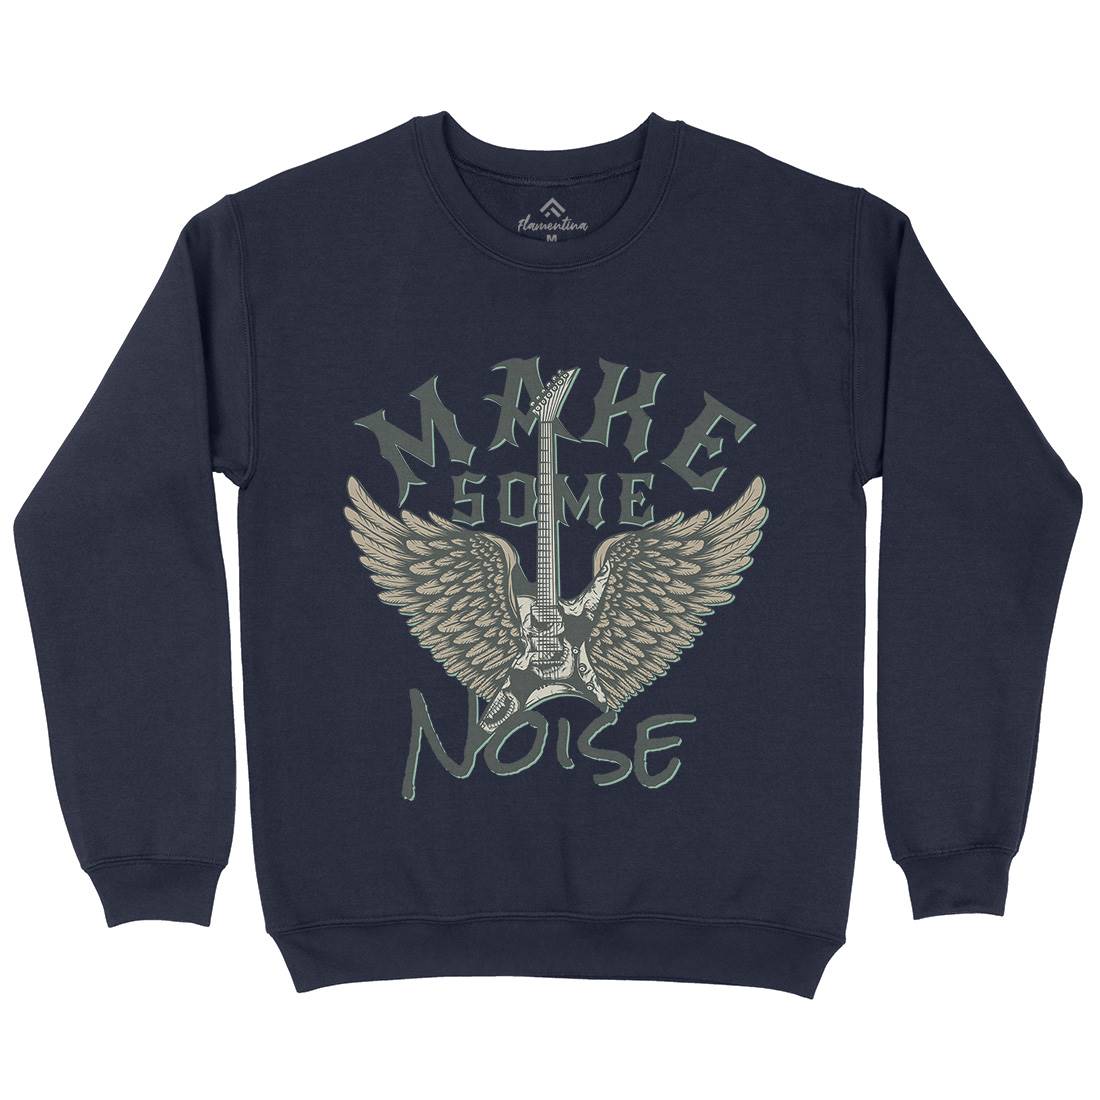 Make Some Noise Kids Crew Neck Sweatshirt Music D955